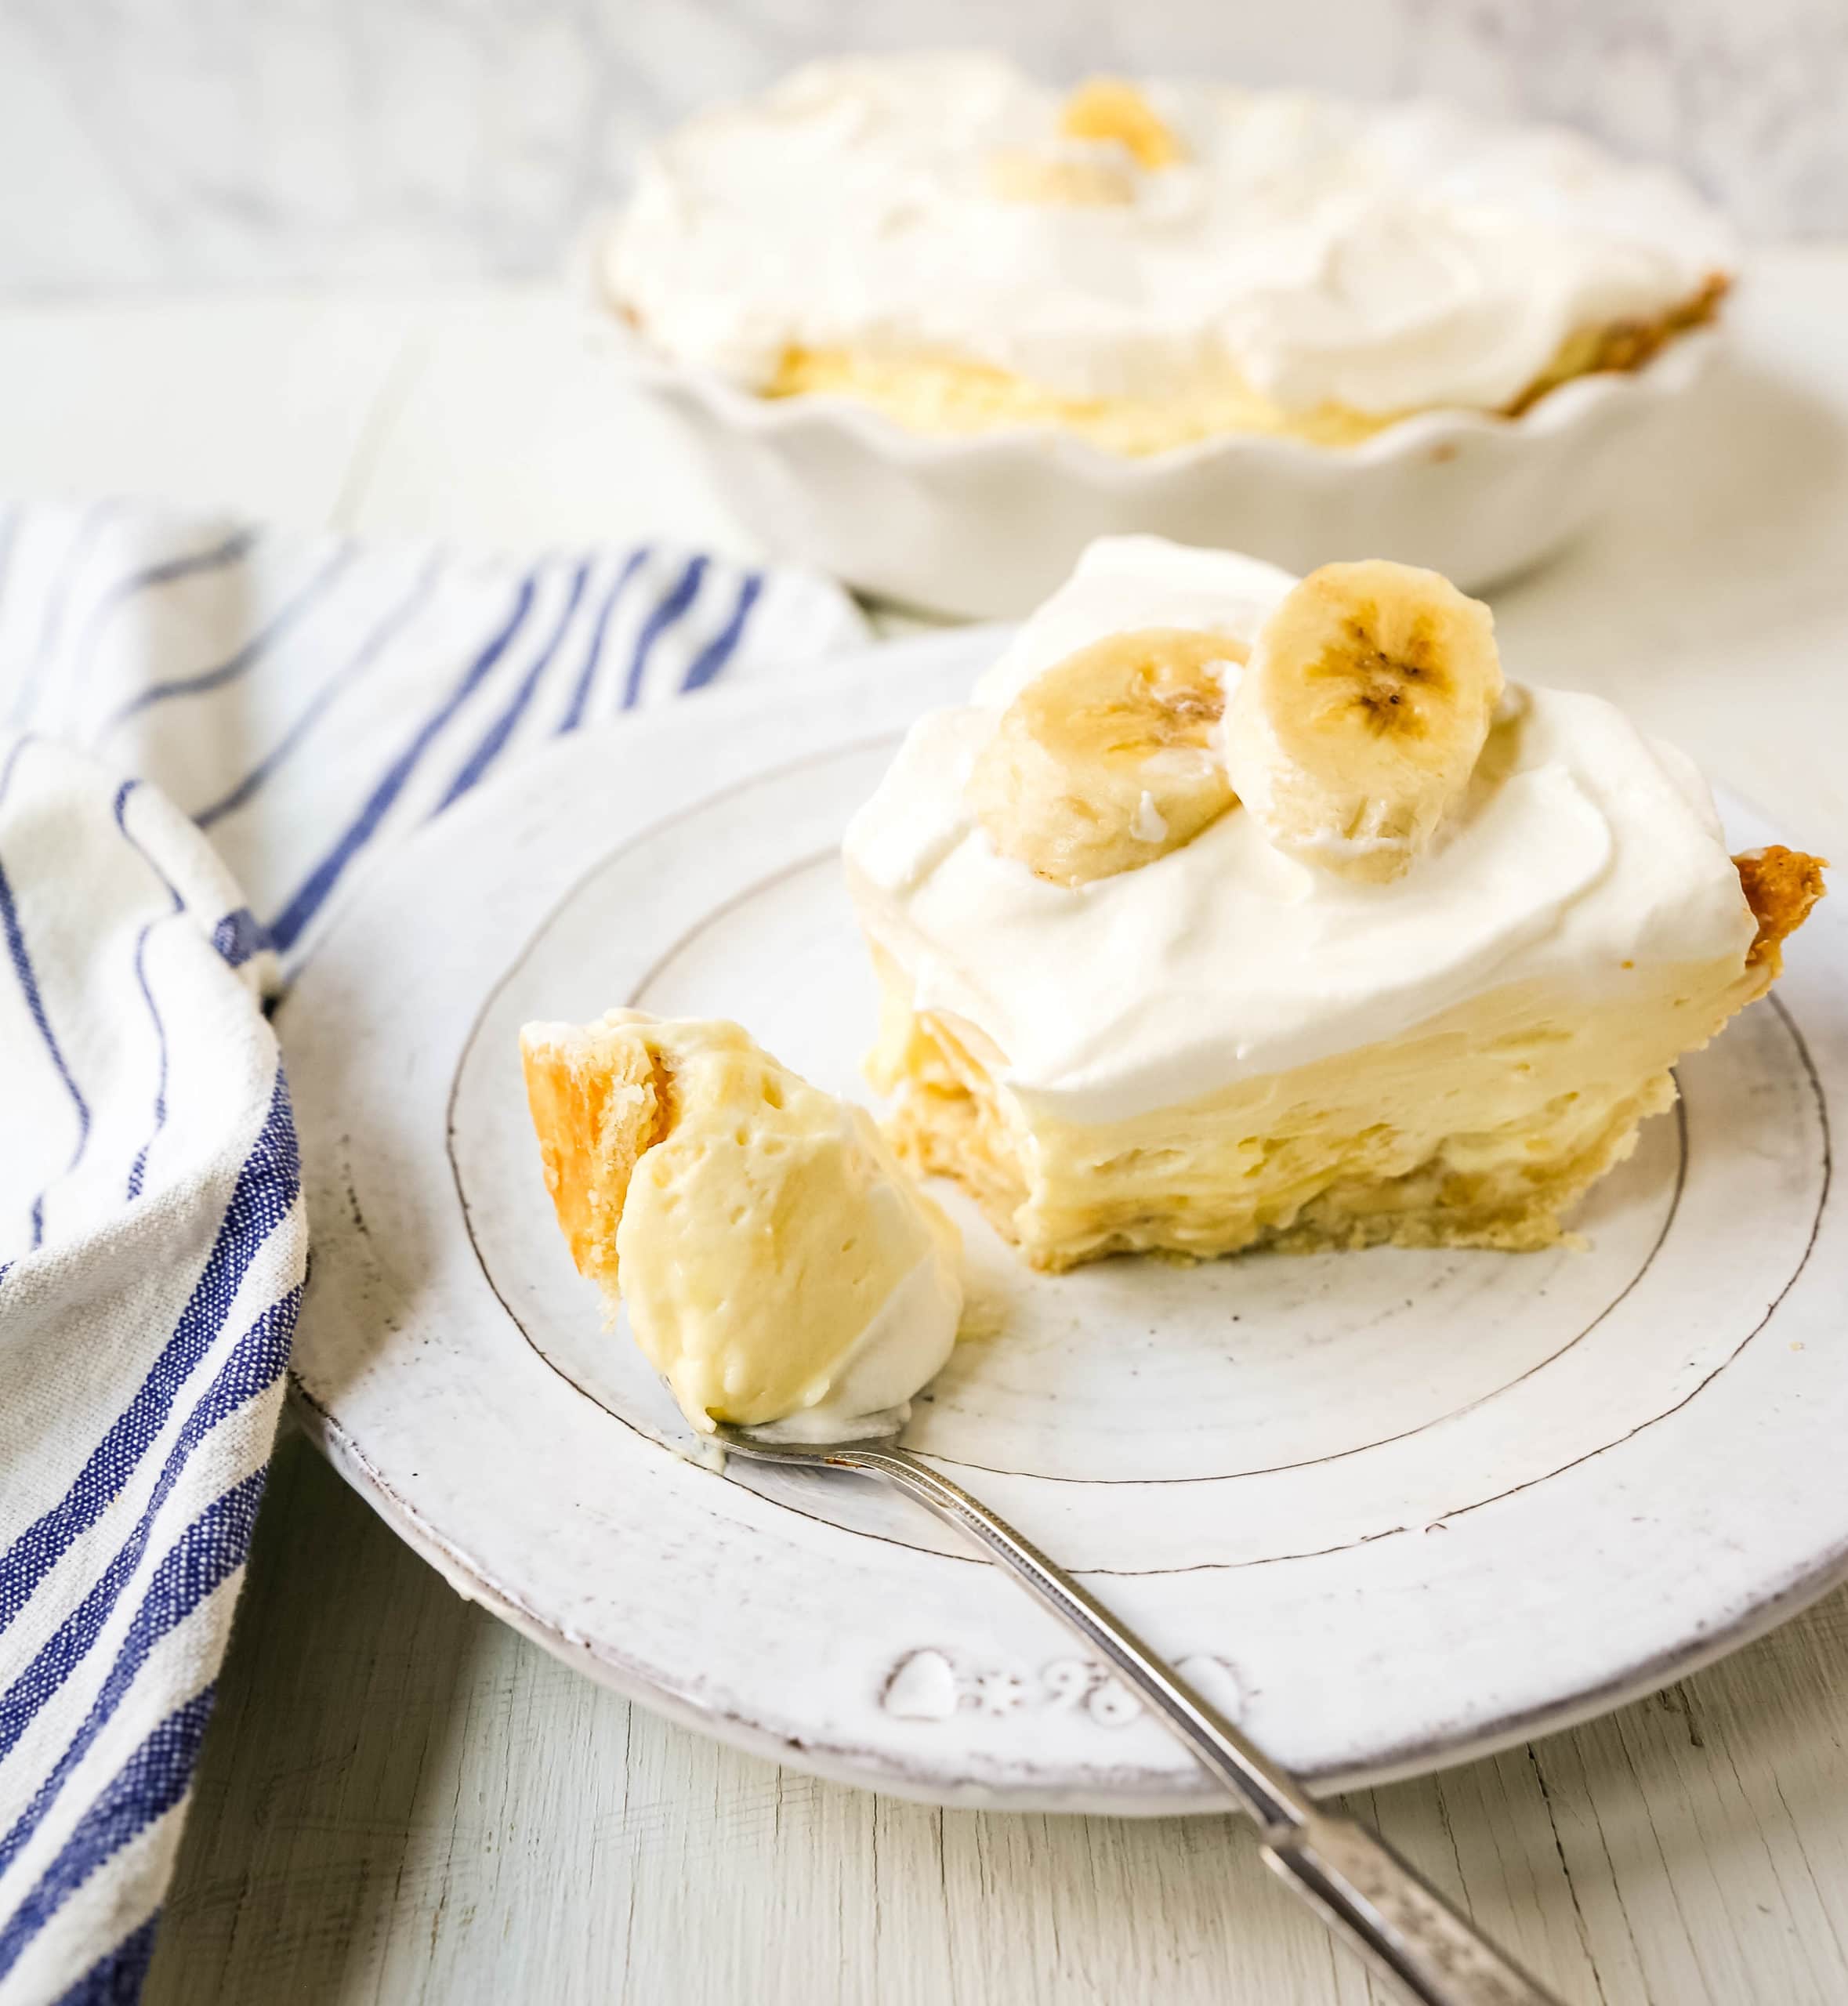 Banana Cream Pie Homemade banana cream pie made with a creamy sweet vanilla filling with fresh bananas, handcrafted whipped cream, all in a buttery pie crust. www.modernhoney.com #pie #bananacreampie #thanksgiving